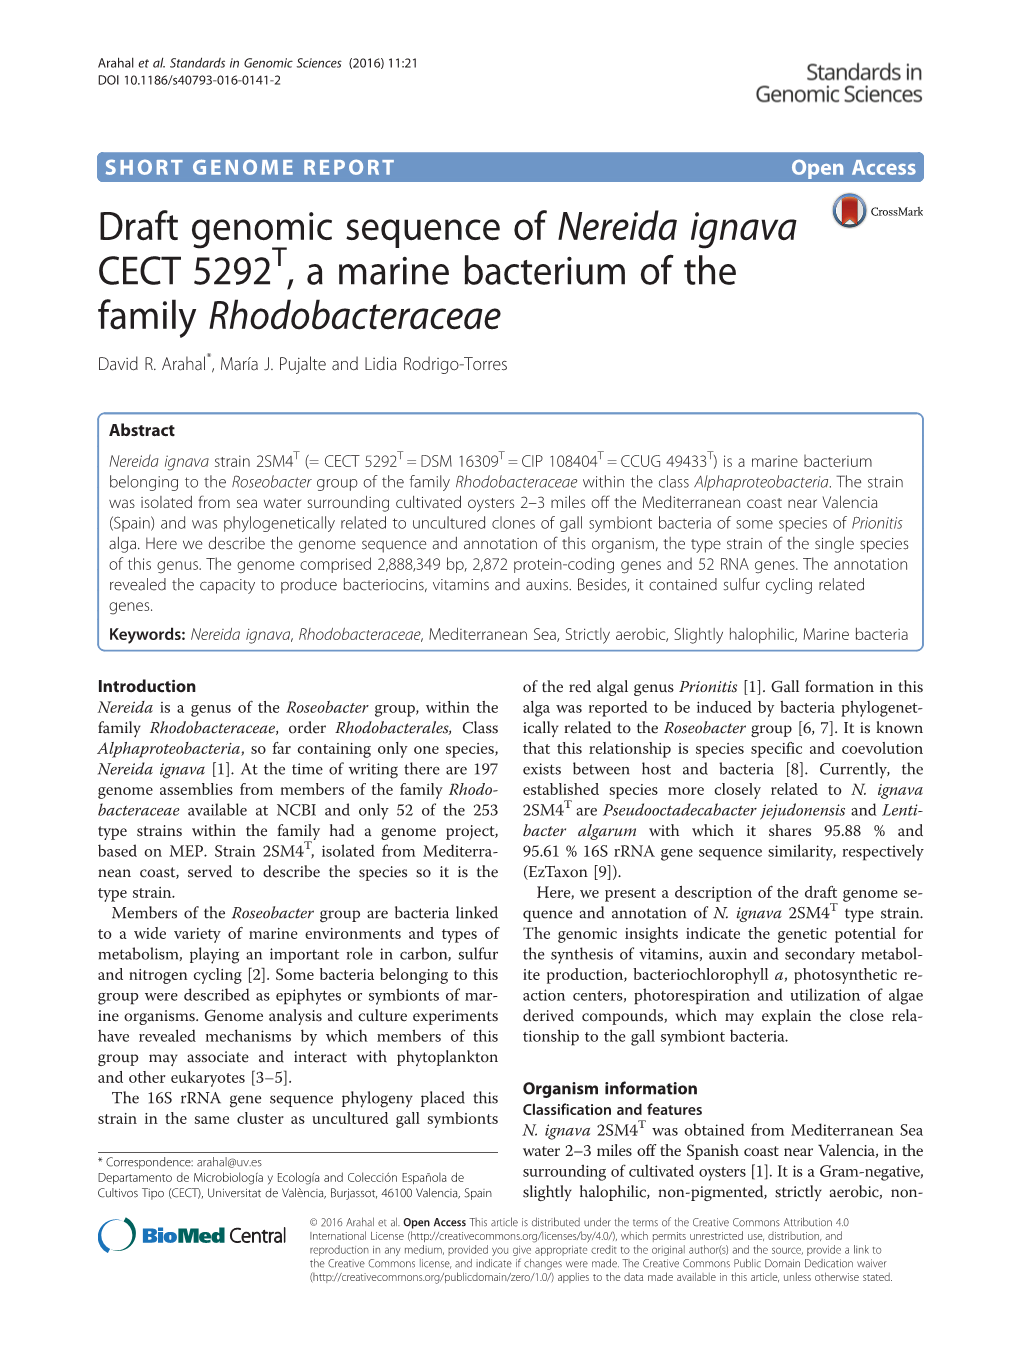 Draft Genomic Sequence of Nereida Ignava CECT 5292T, a Marine Bacterium of the Family Rhodobacteraceae David R